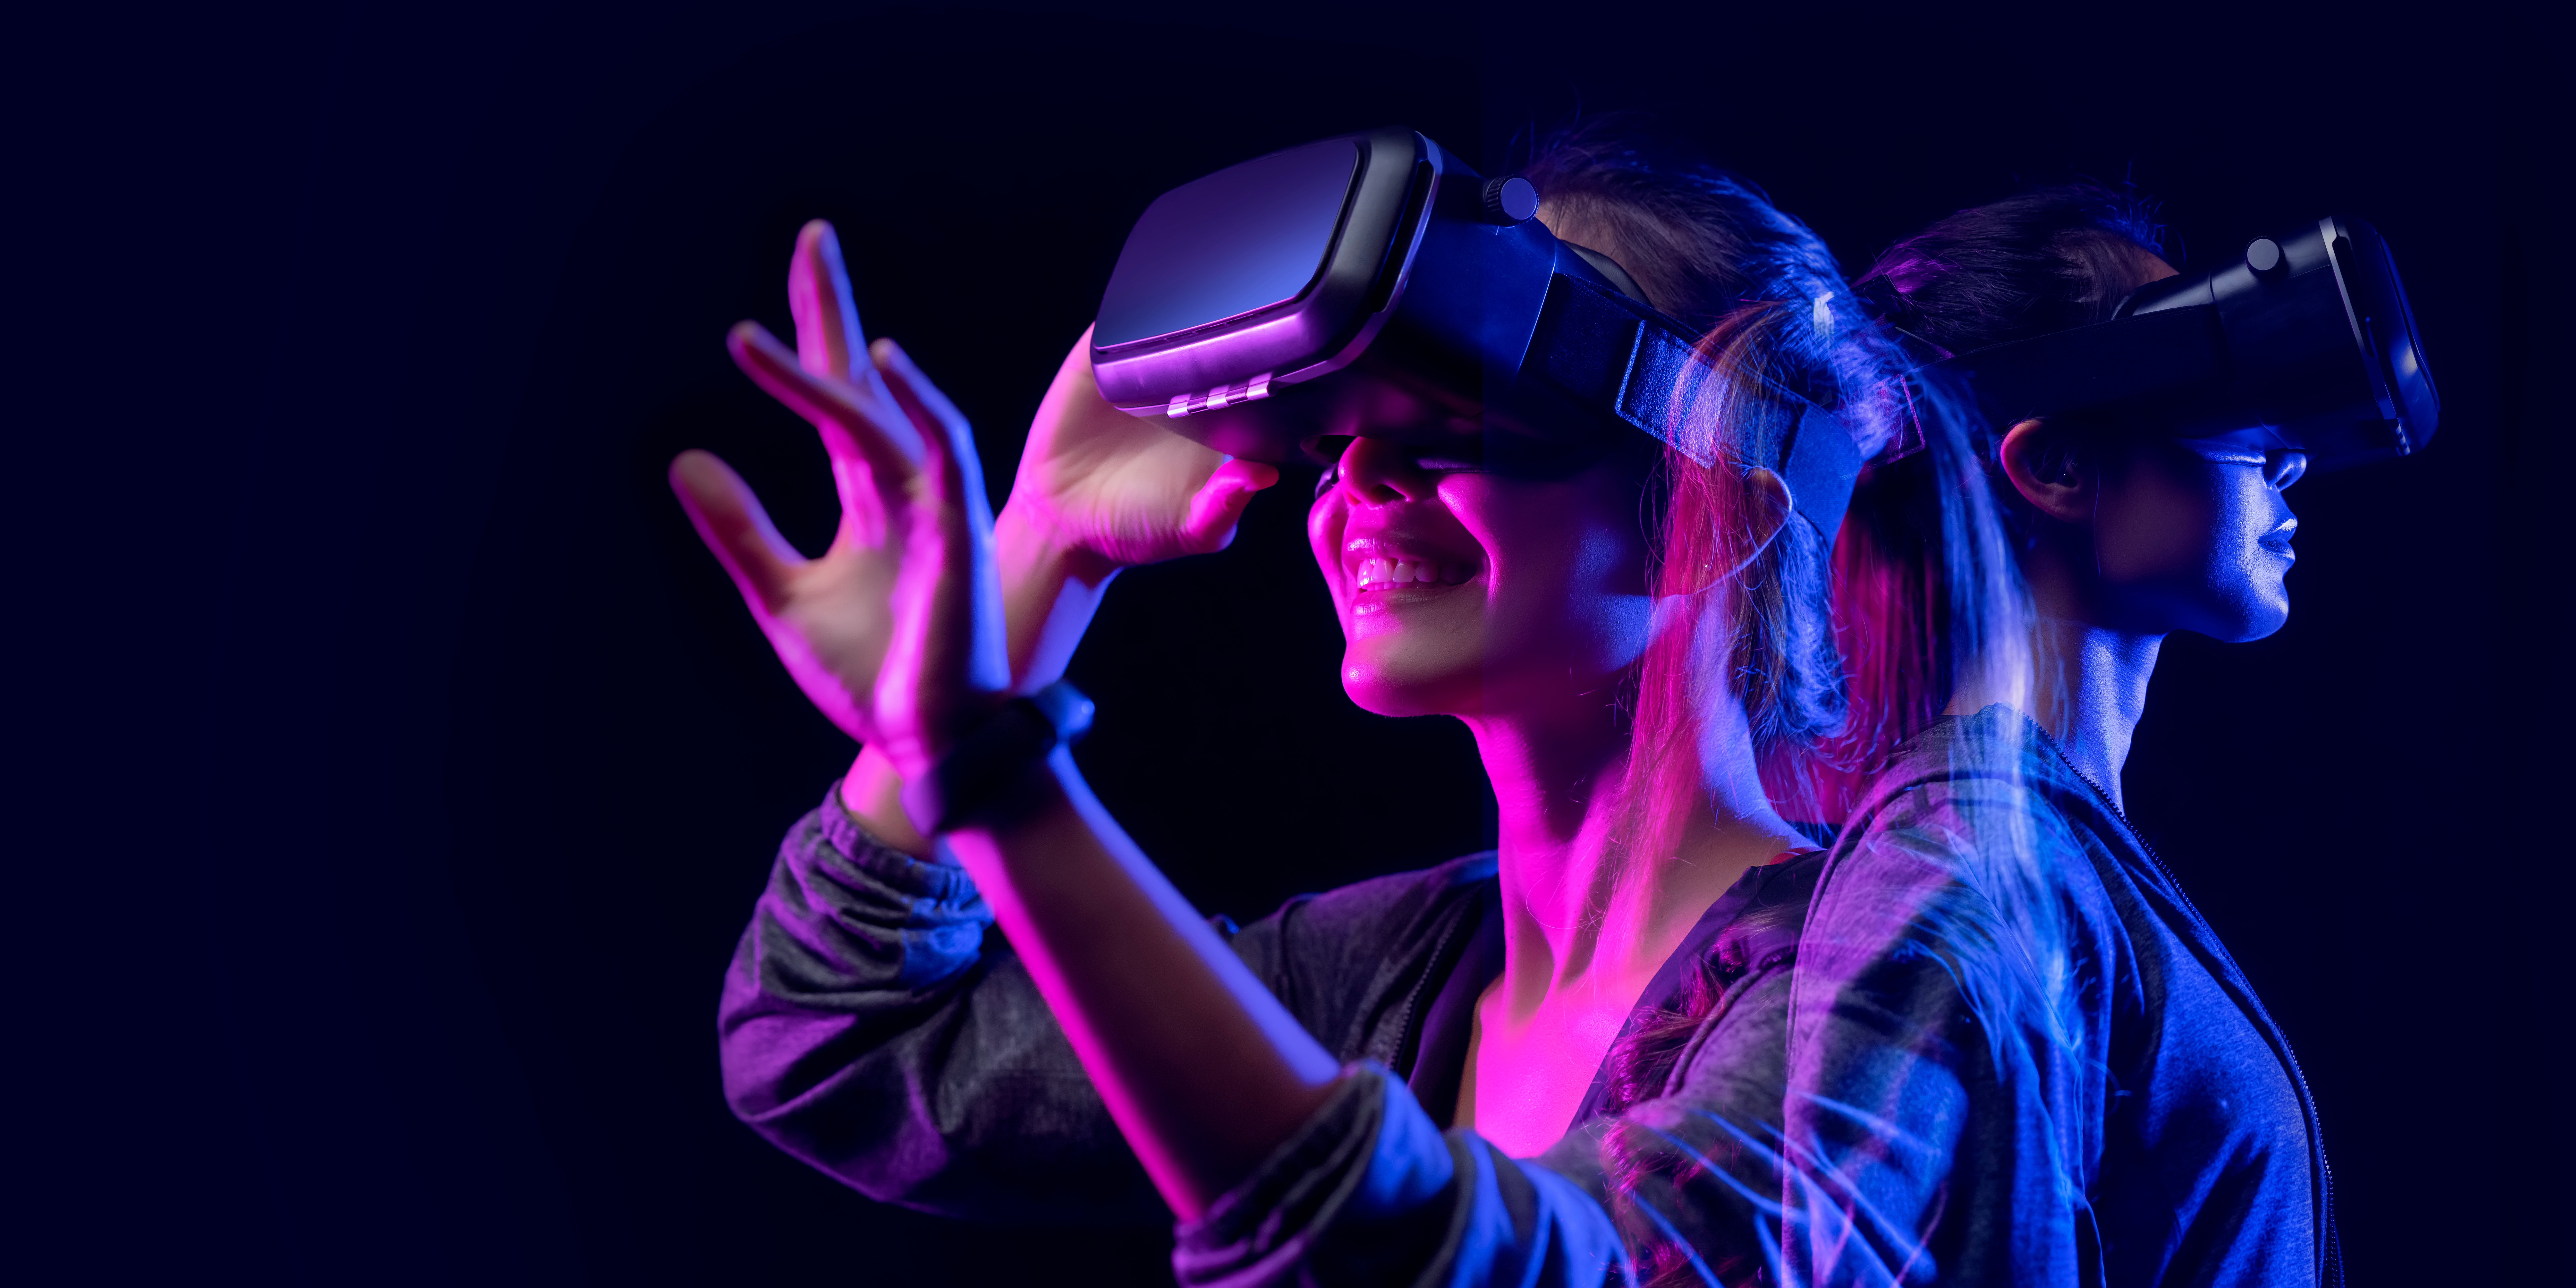 young woman and man wearing virtual reality headwear